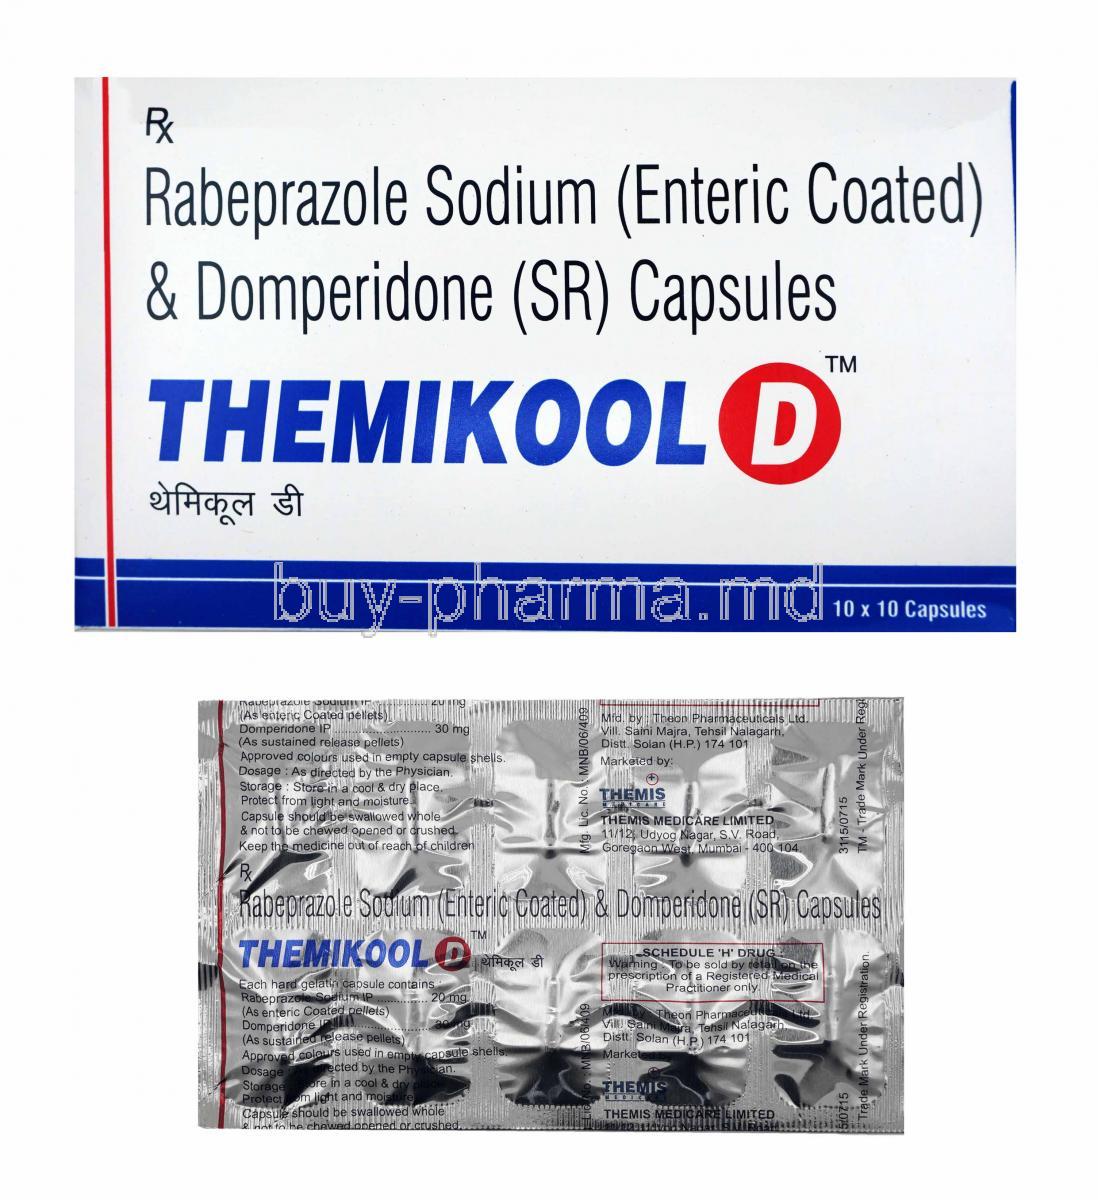 Themikool D, Domperidone and Rabeprazole box and capsule